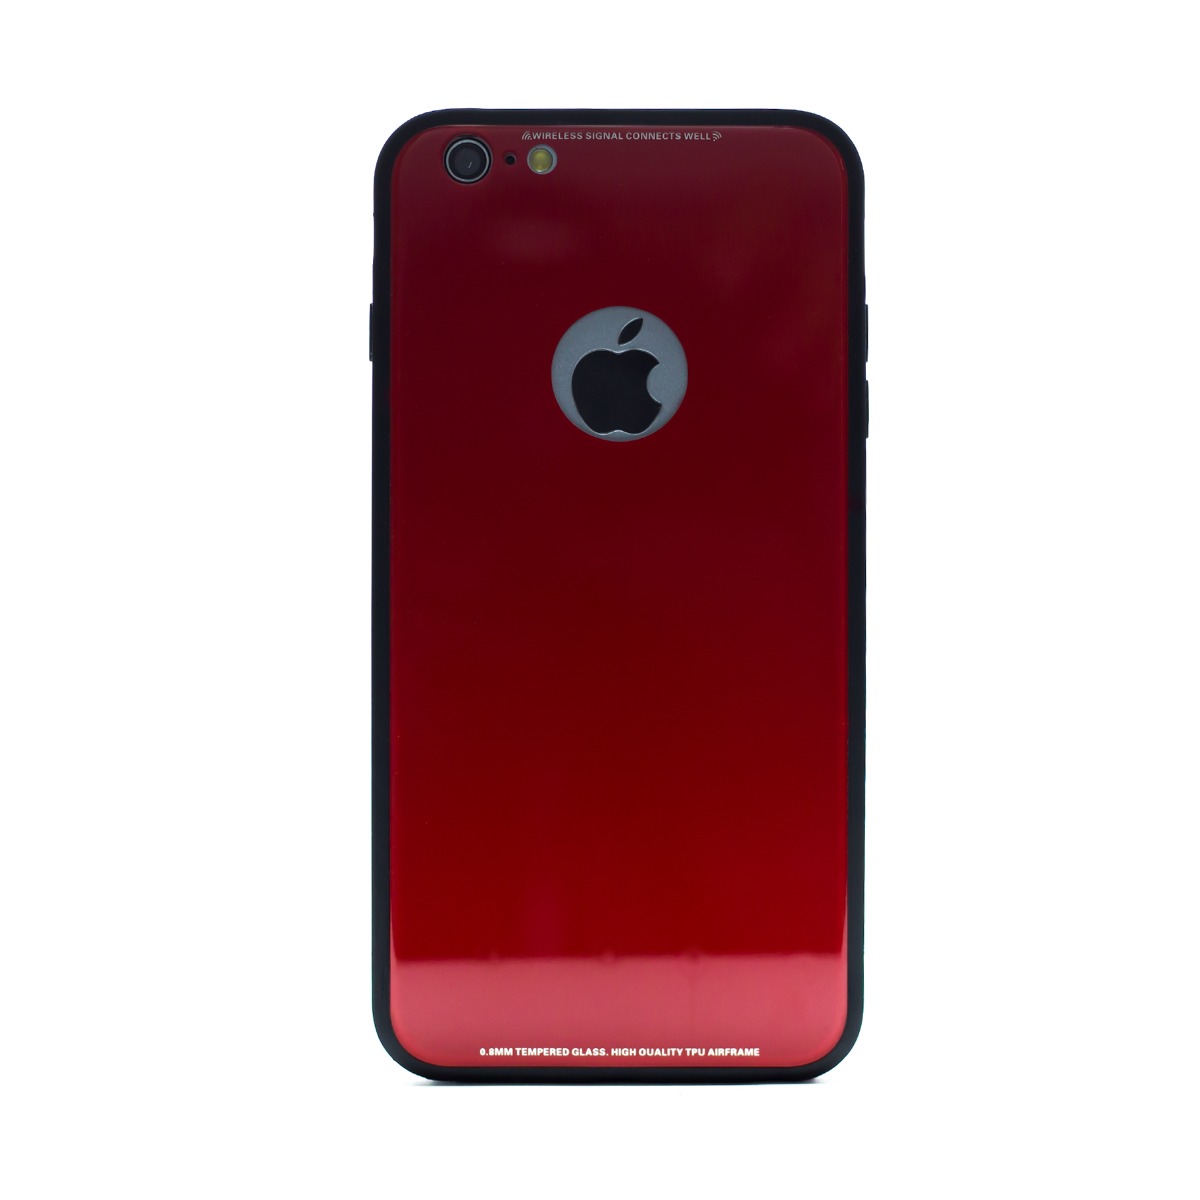 Husa spate sticla iPhone 6 Plus Rosu iShield thumb